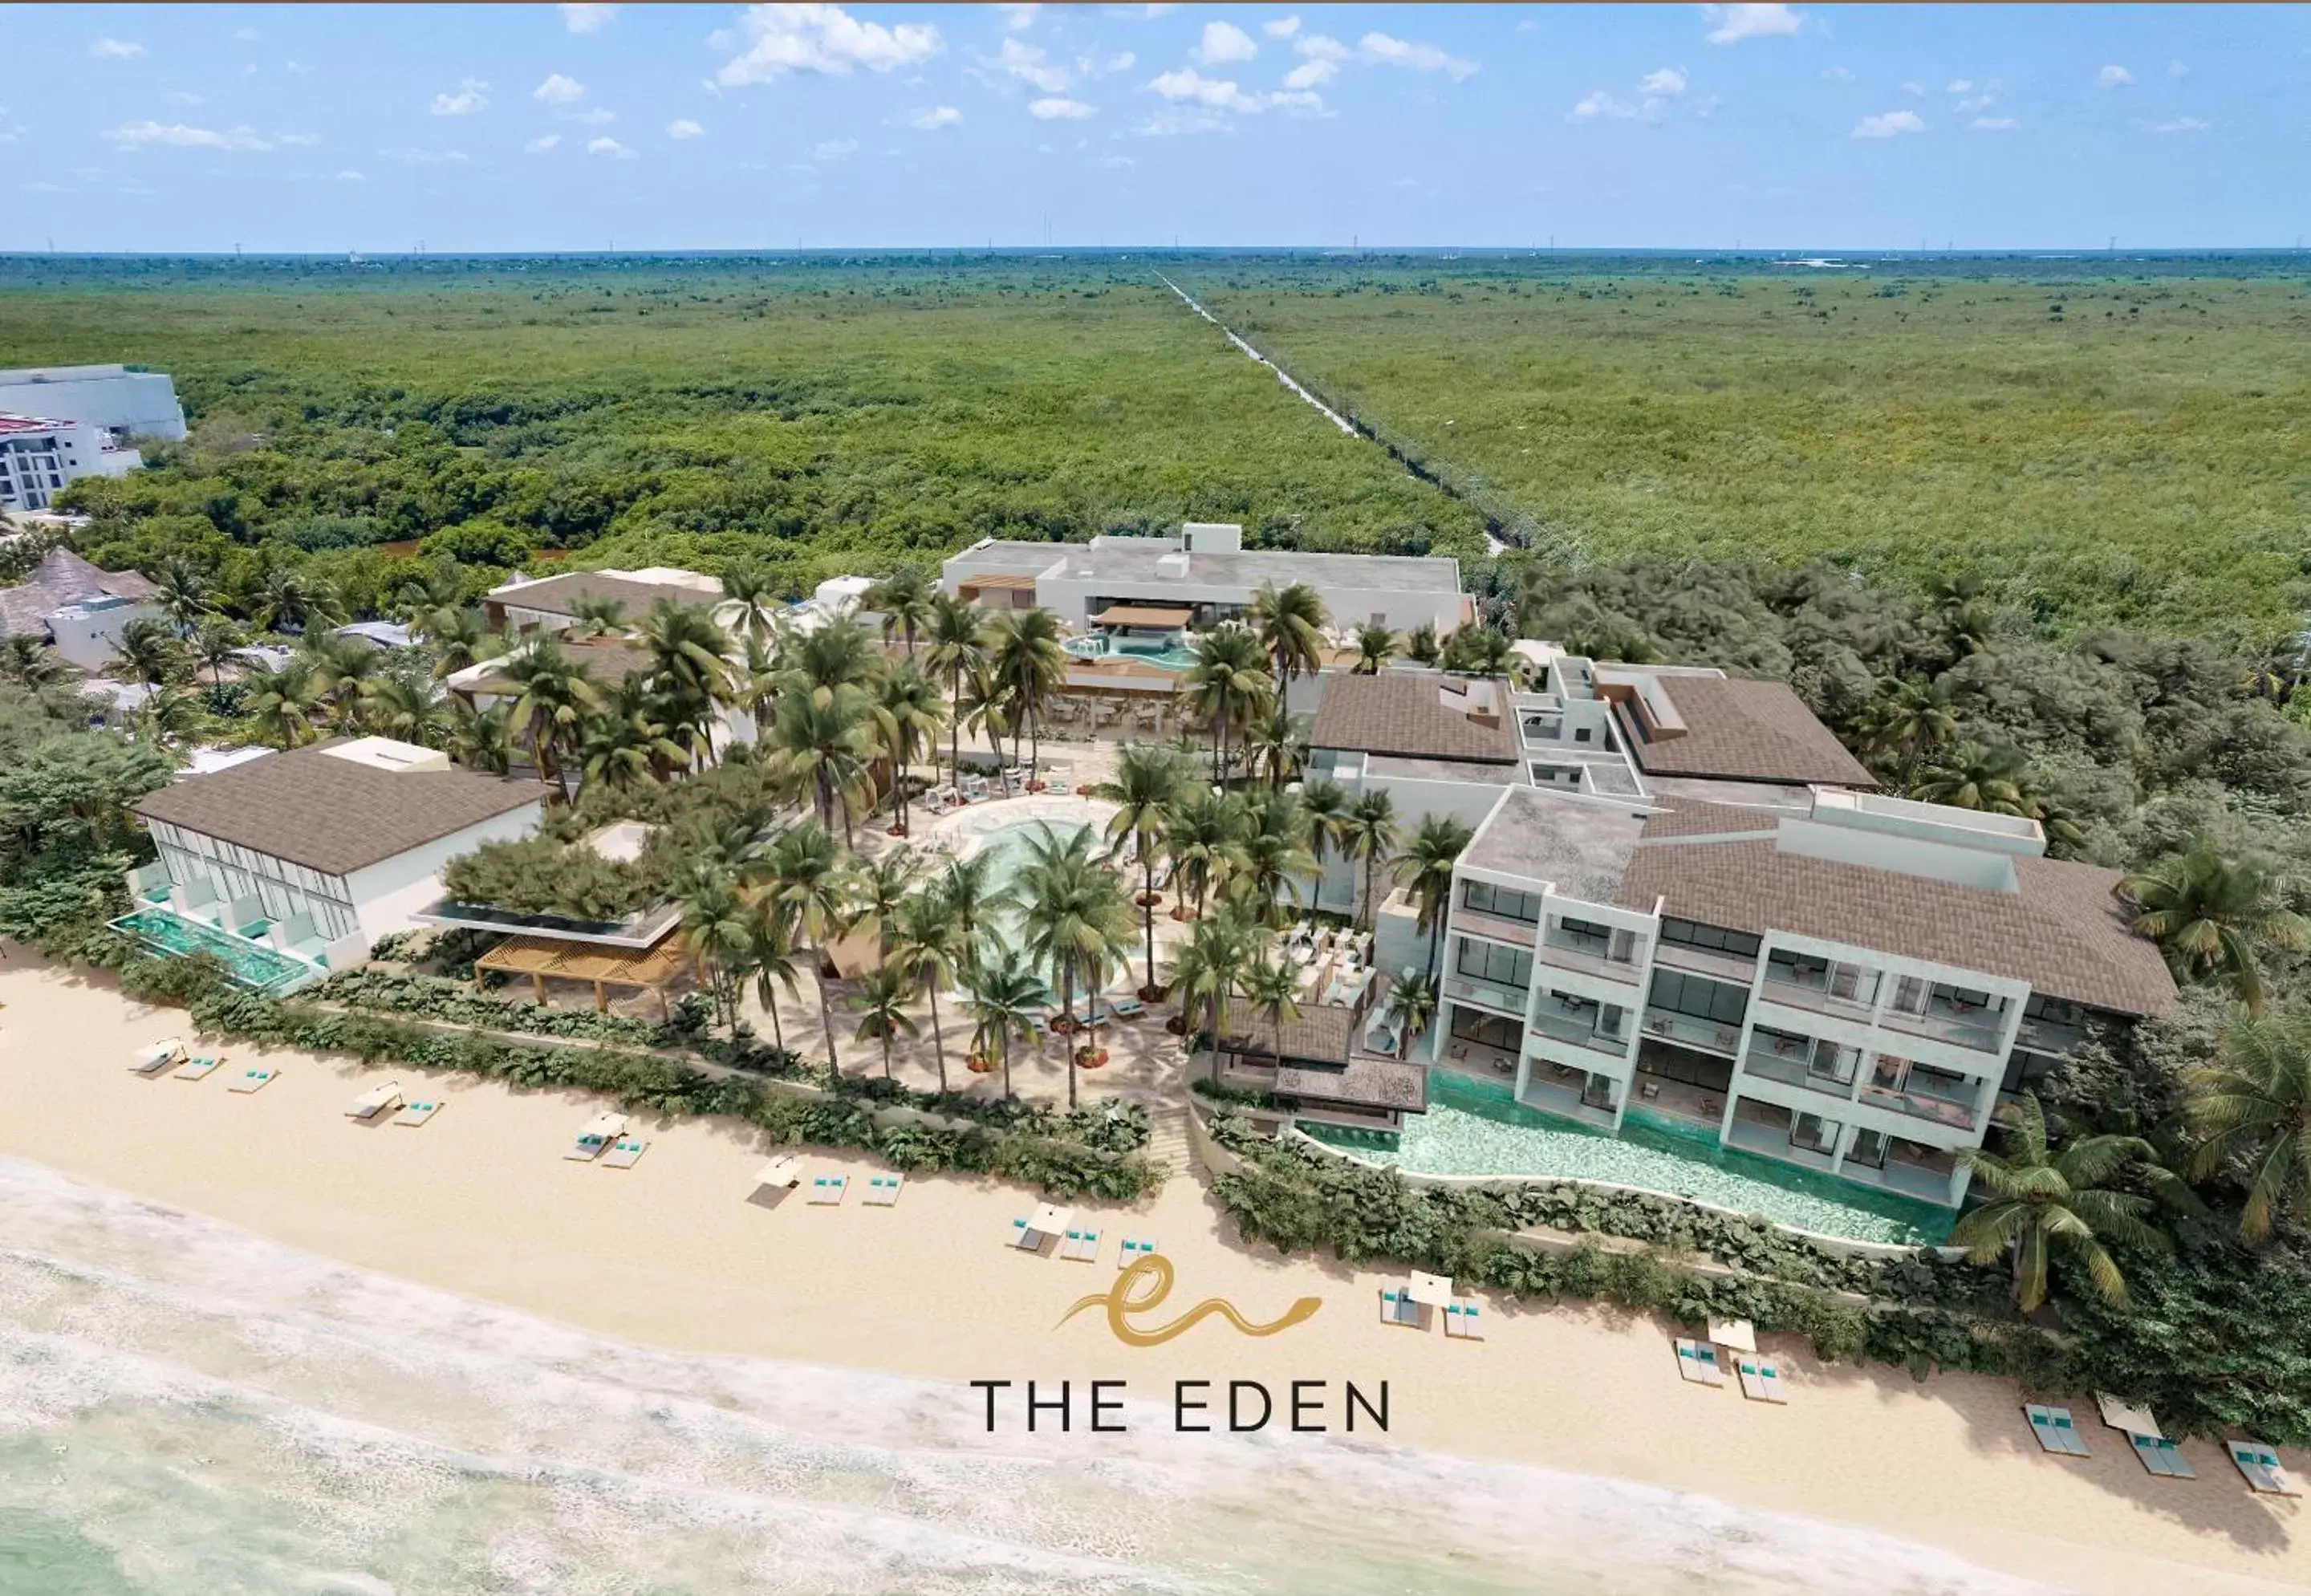 Area and facilities, Bird's-eye View in Desire Riviera Maya Resort